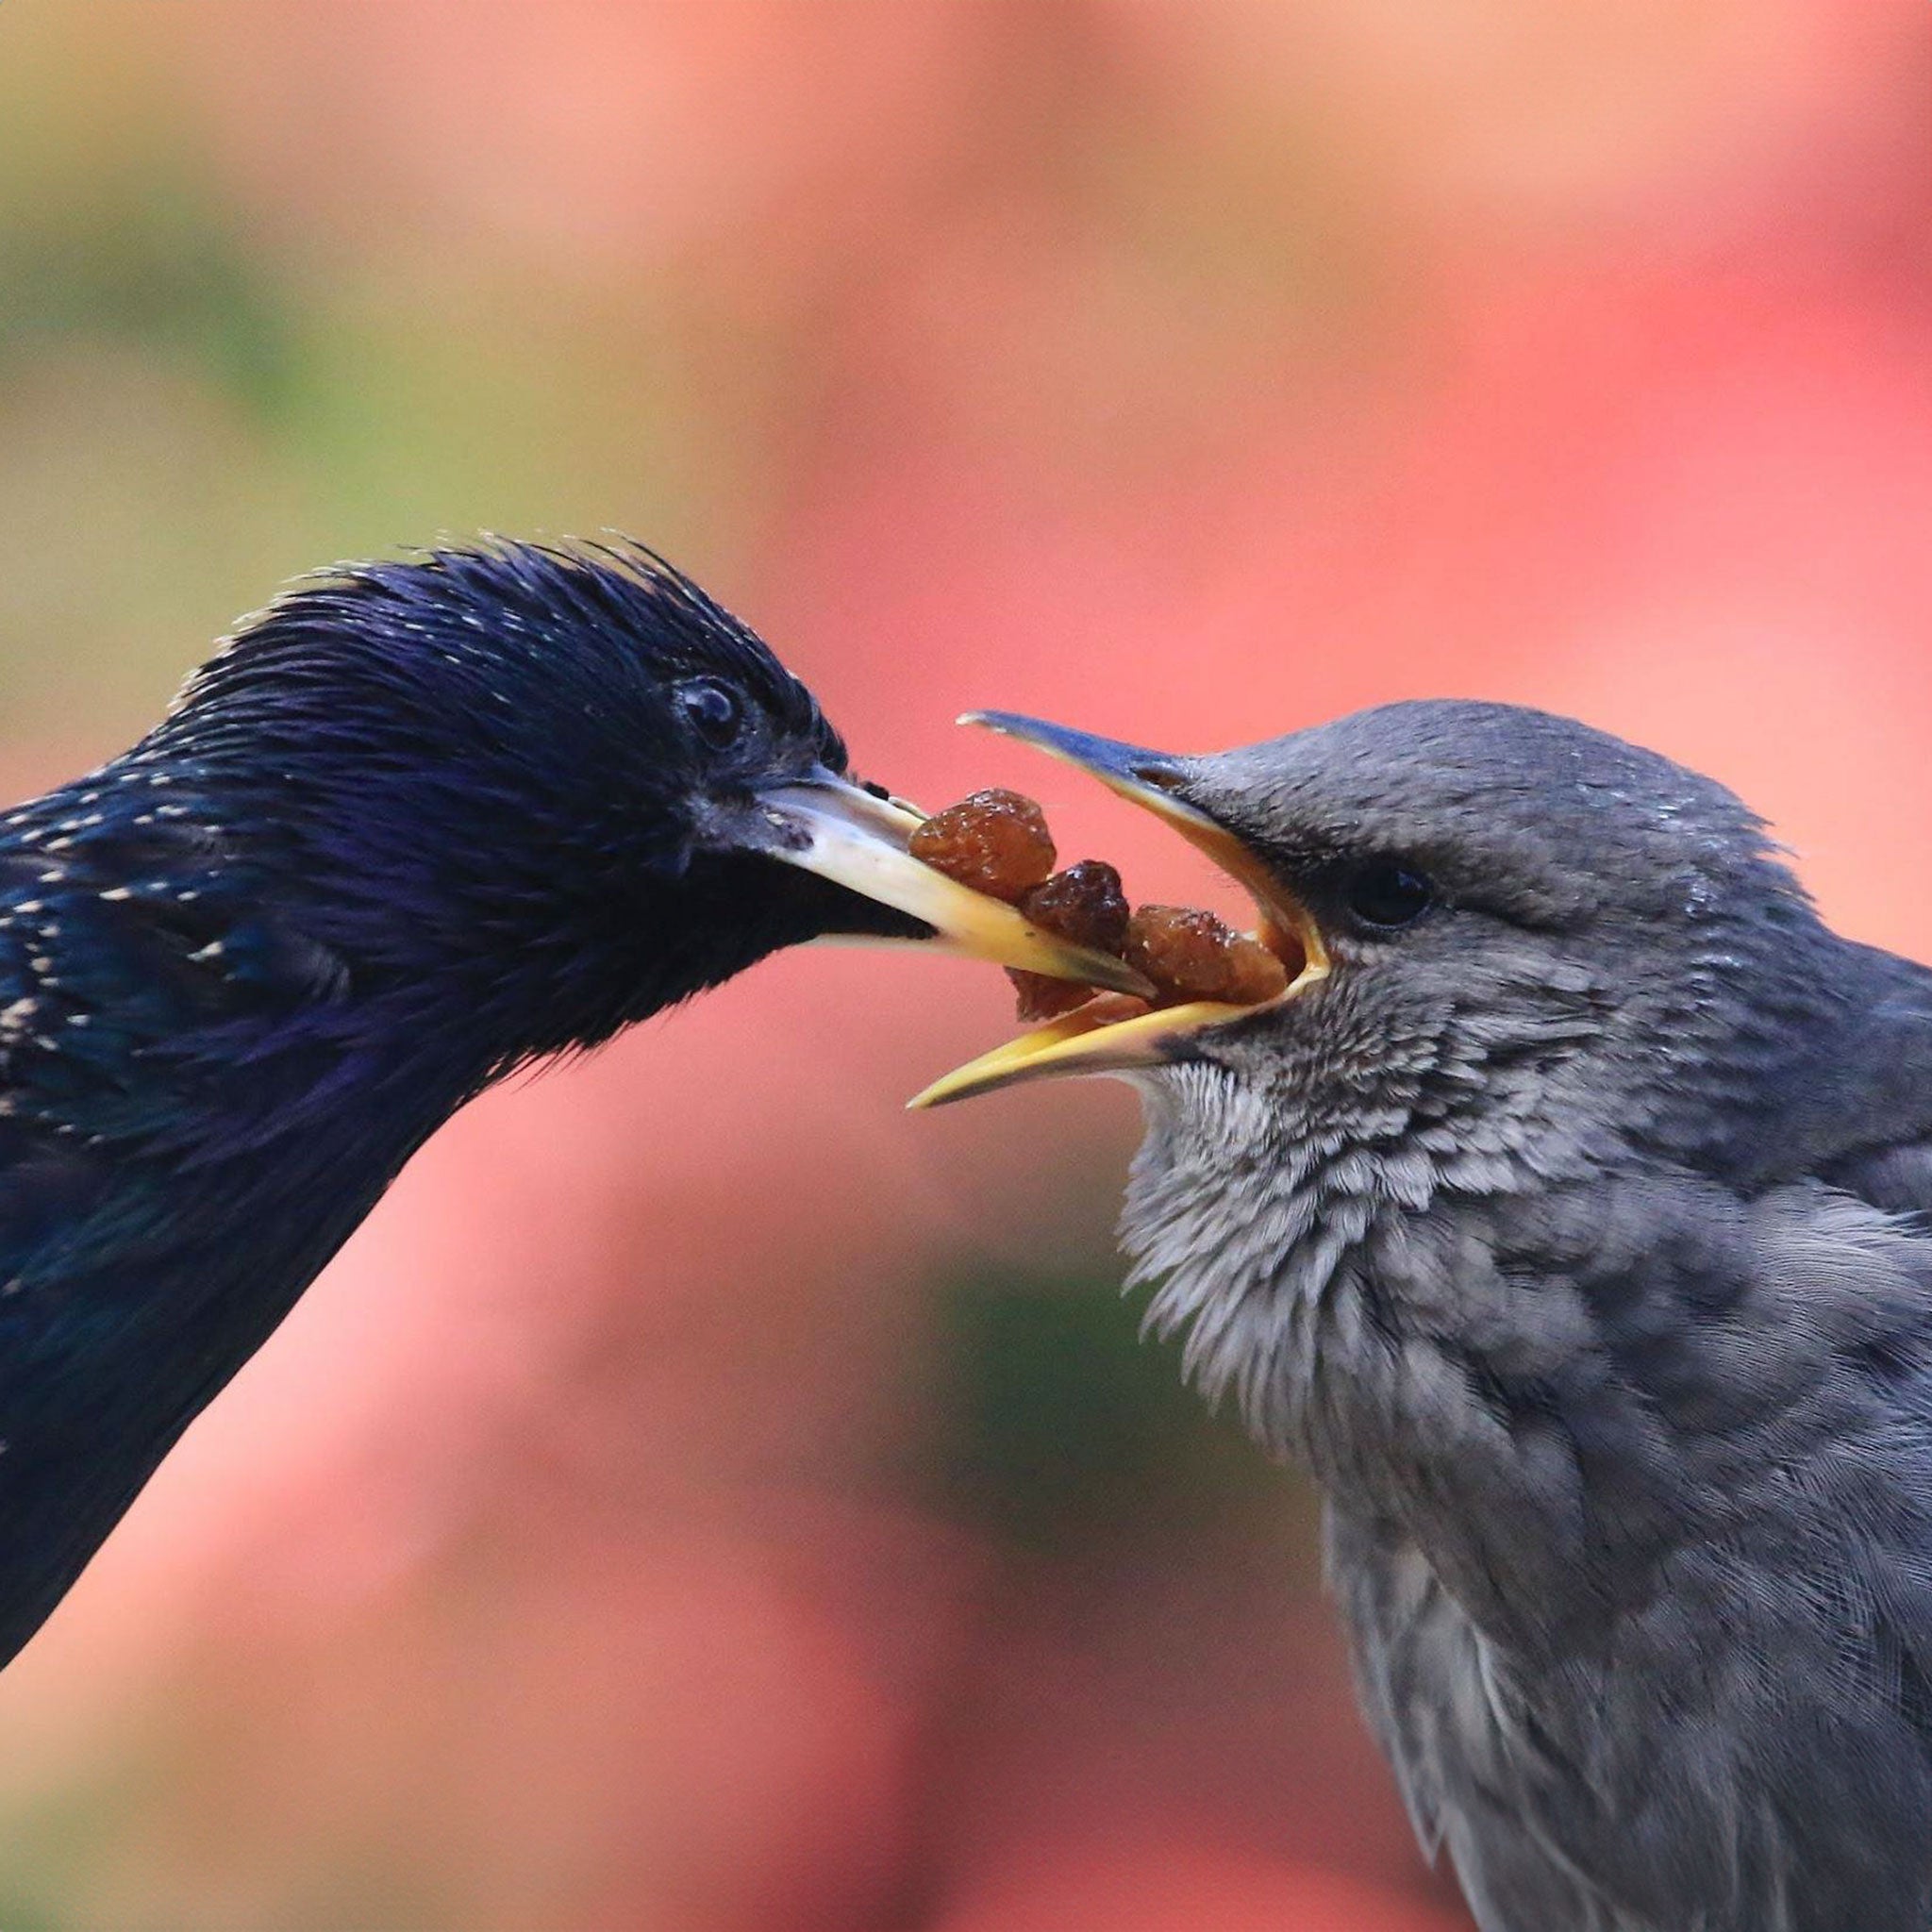 Starling feeding fledgling raisins